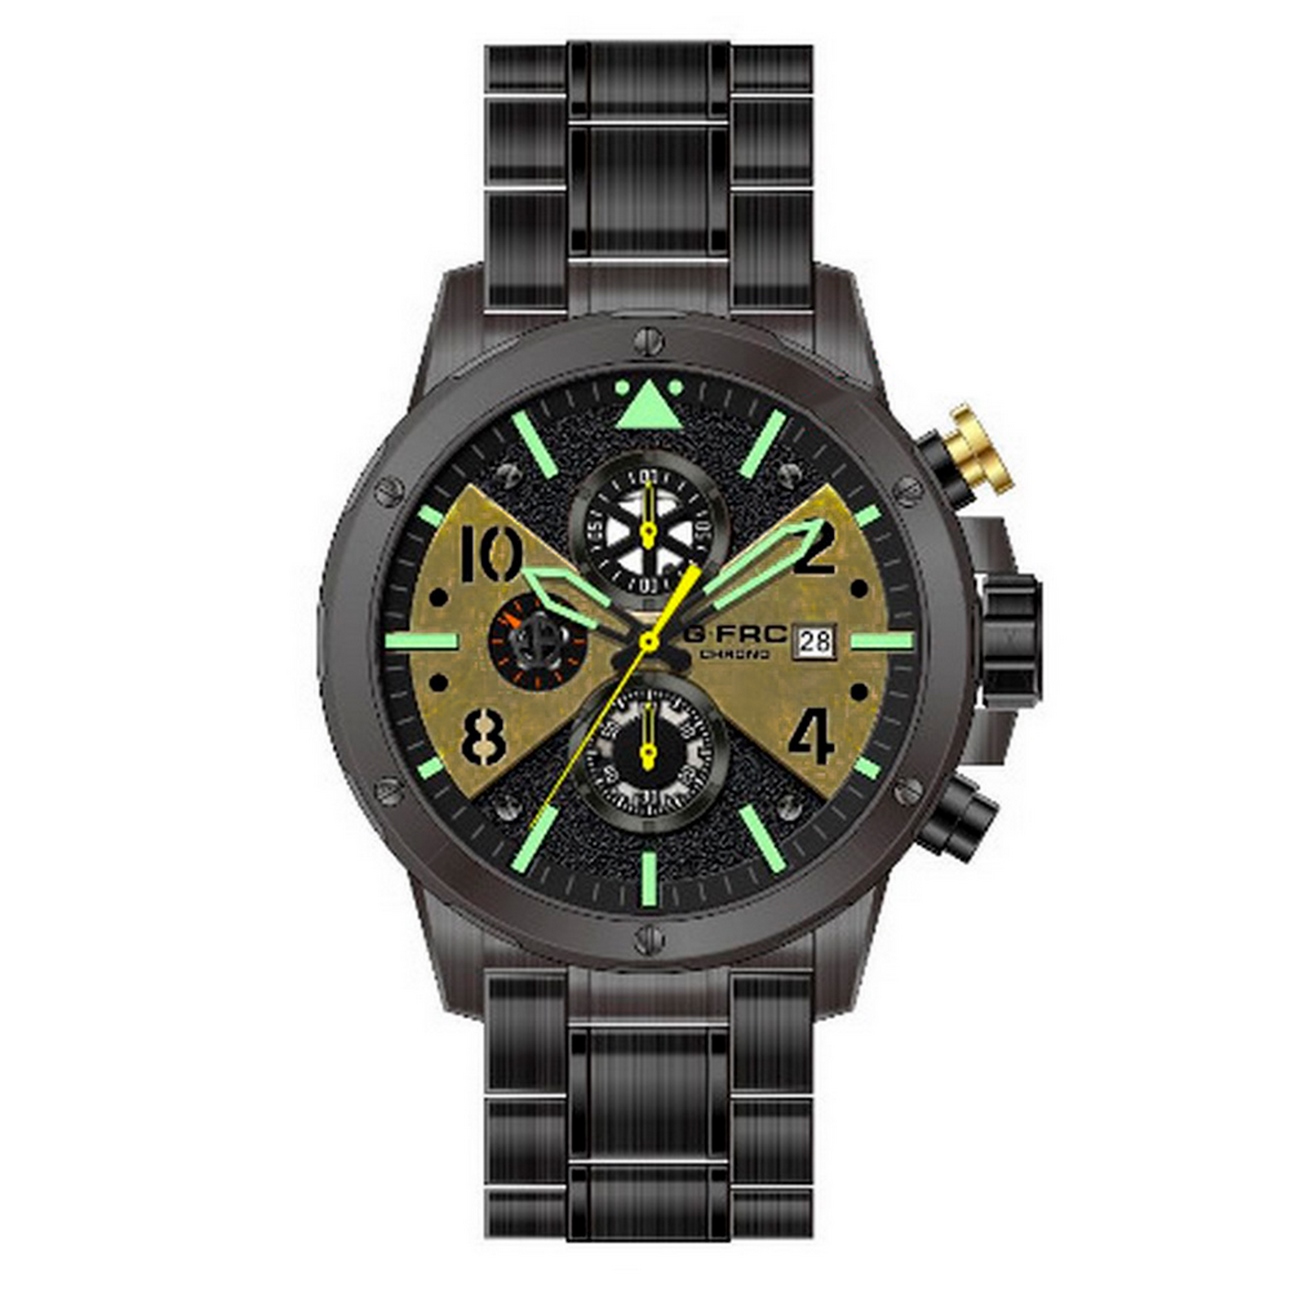 Reloj G-force Original H3716g Cronografo Negro + Estuche